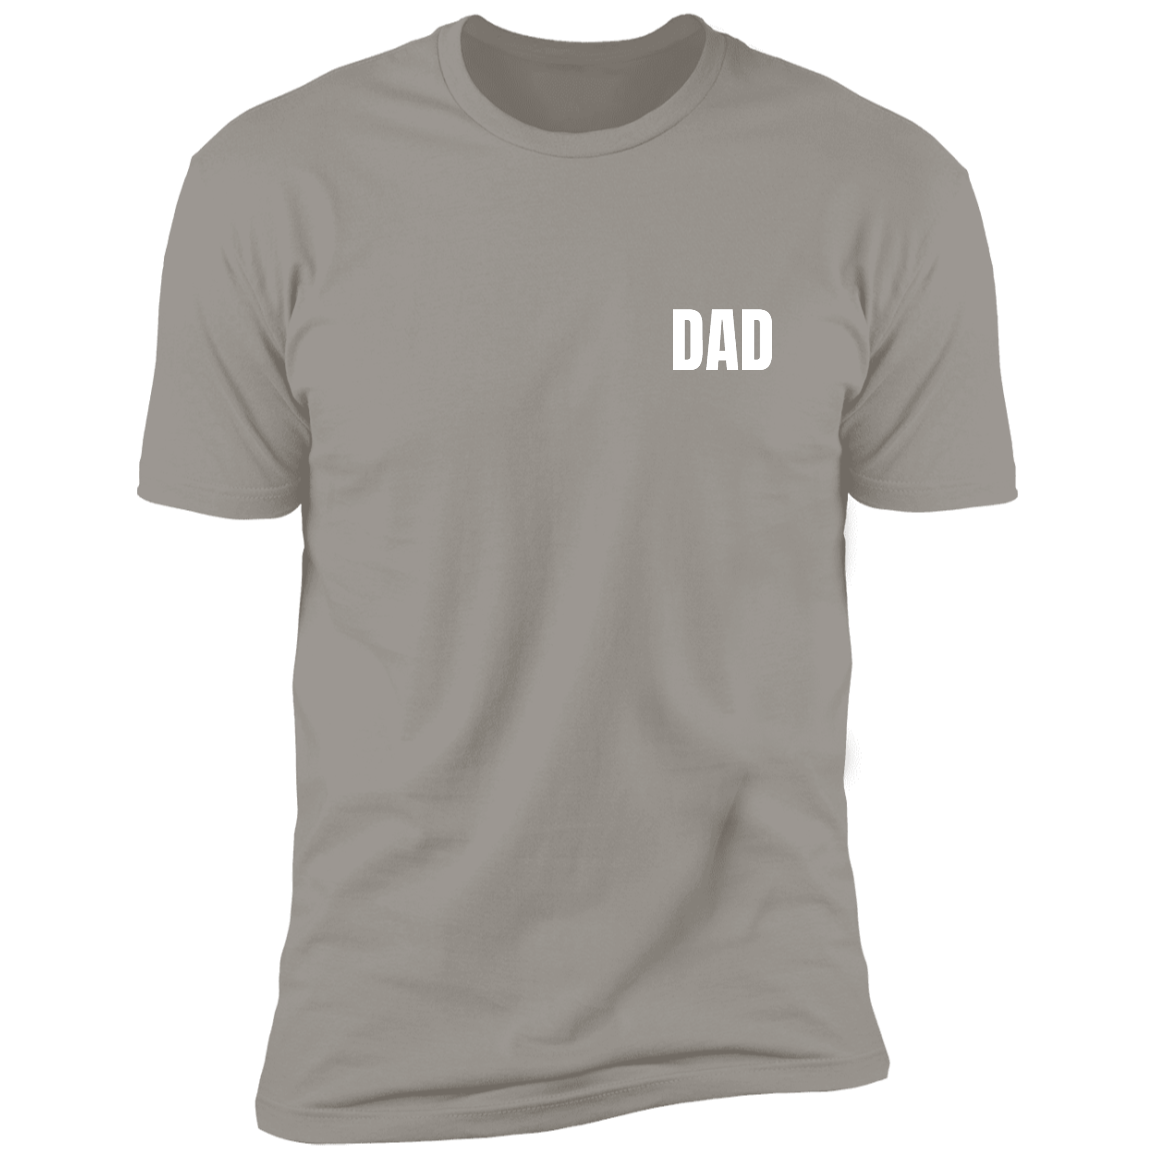 Men's T-Shirt For Dad In Light Grey Color